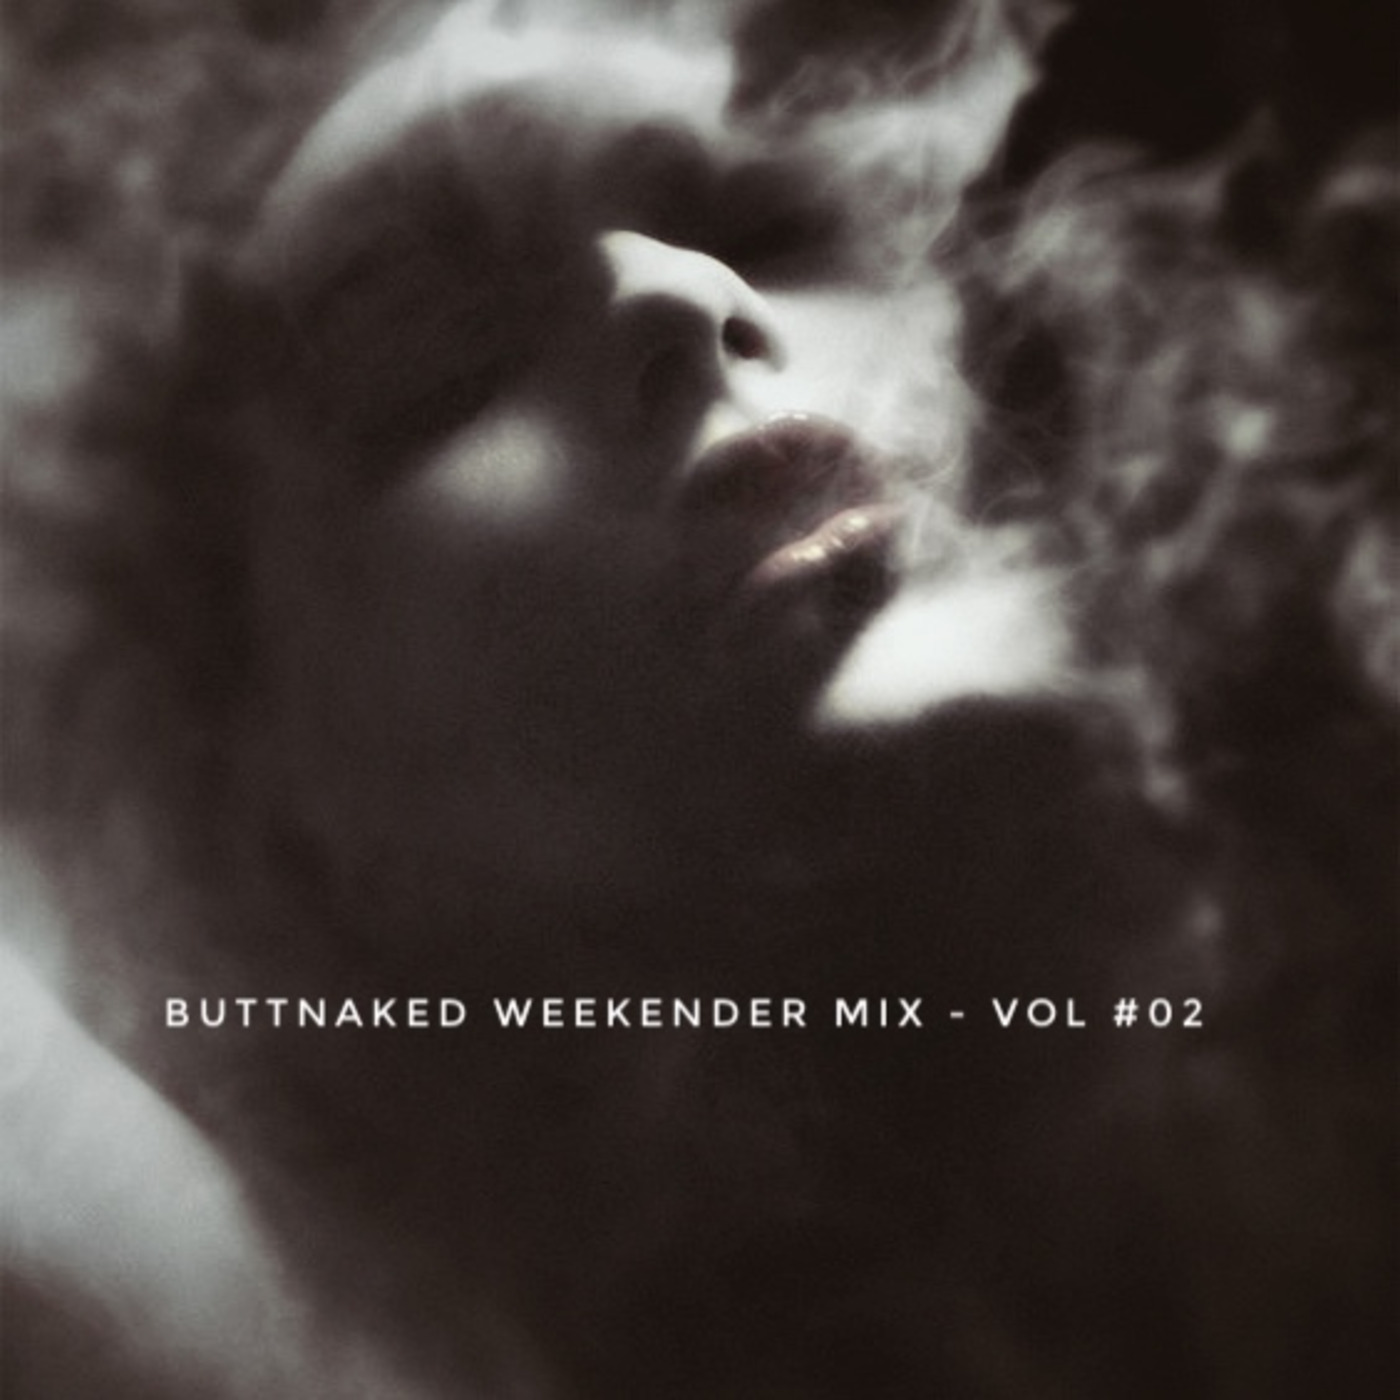 Iain Willis - Buttnaked Weekender Mix - Vol #02